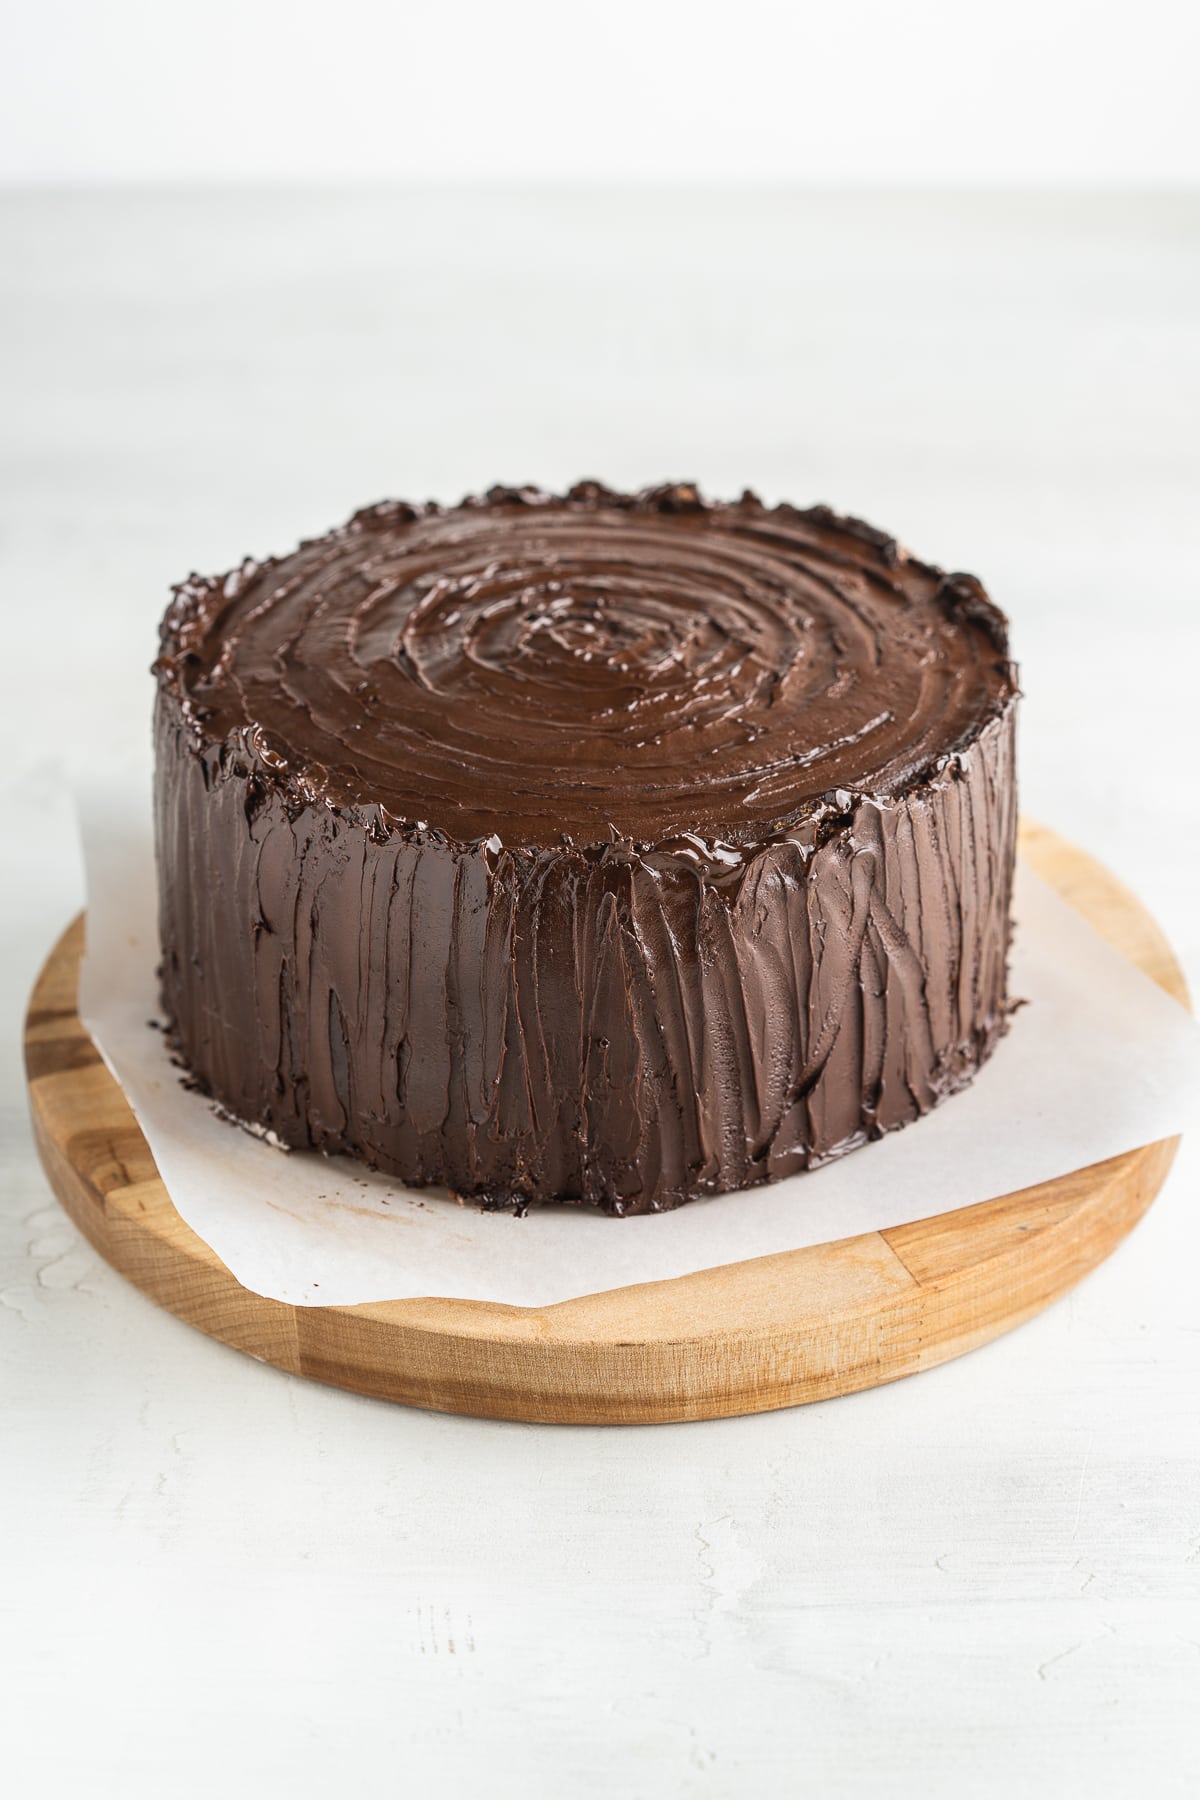 Cake covered with chocolate ganache.